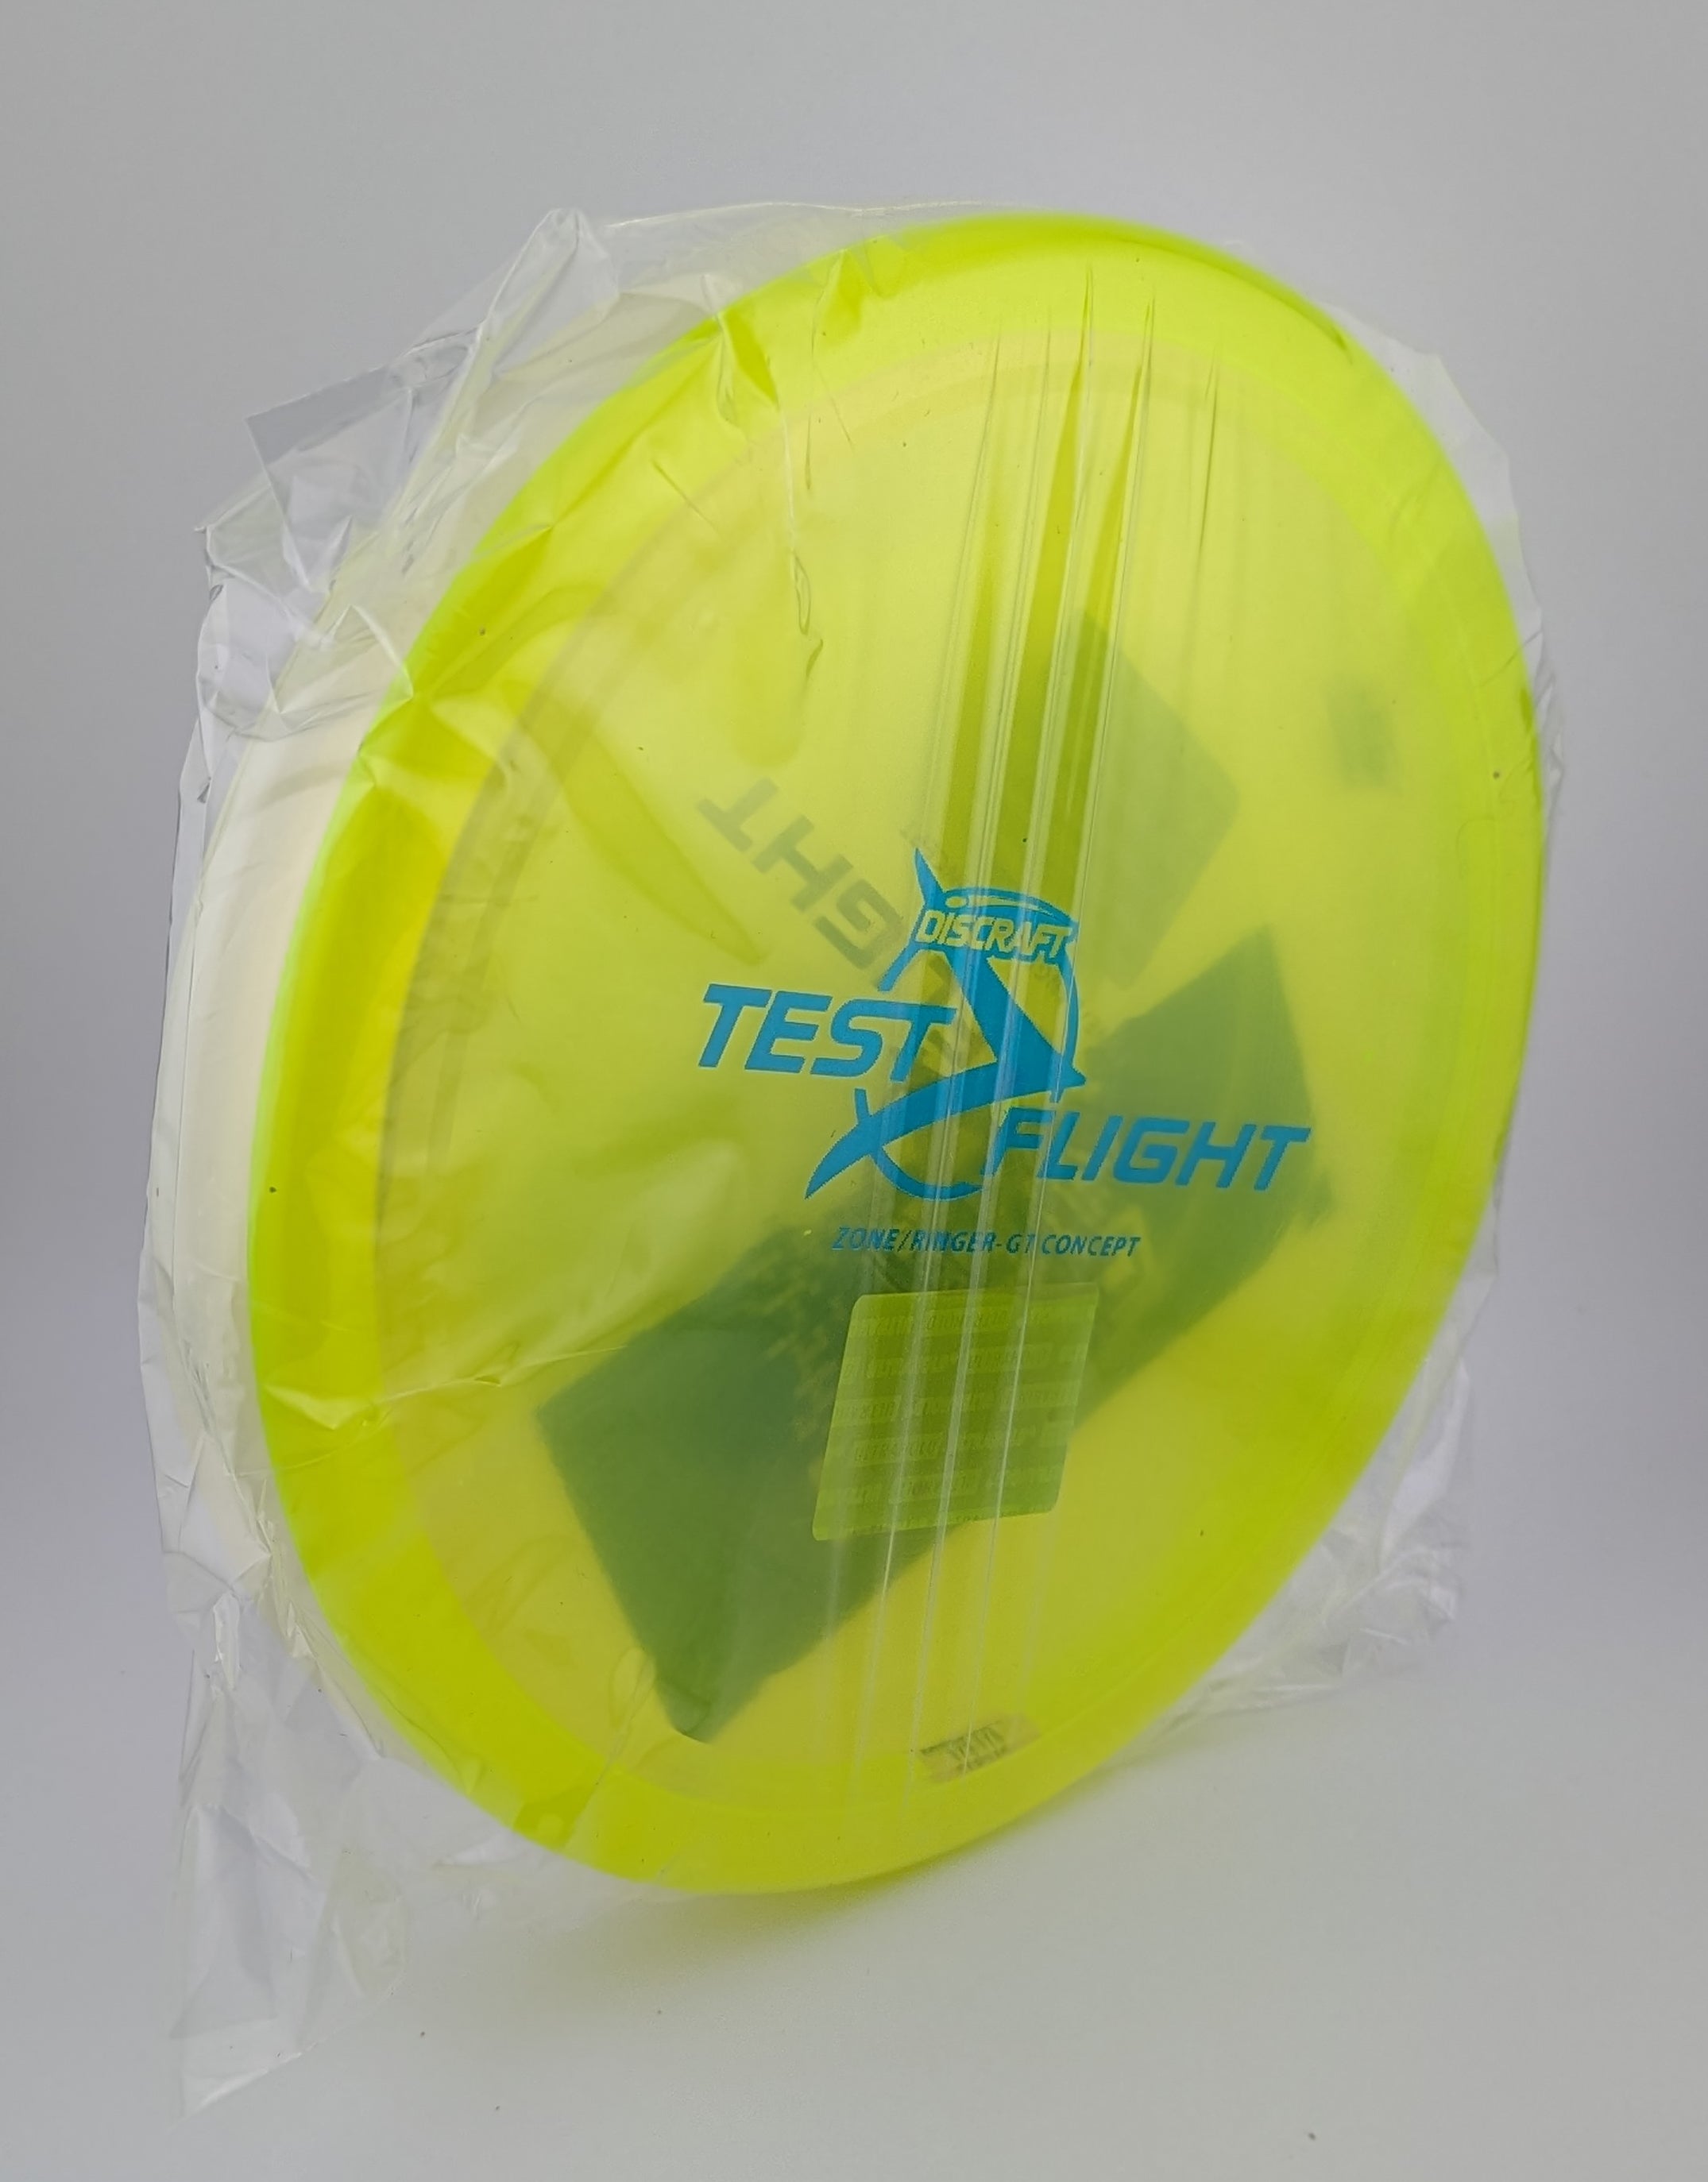 Buy 24-yellow-clear Discraft Zone GT Battlepack